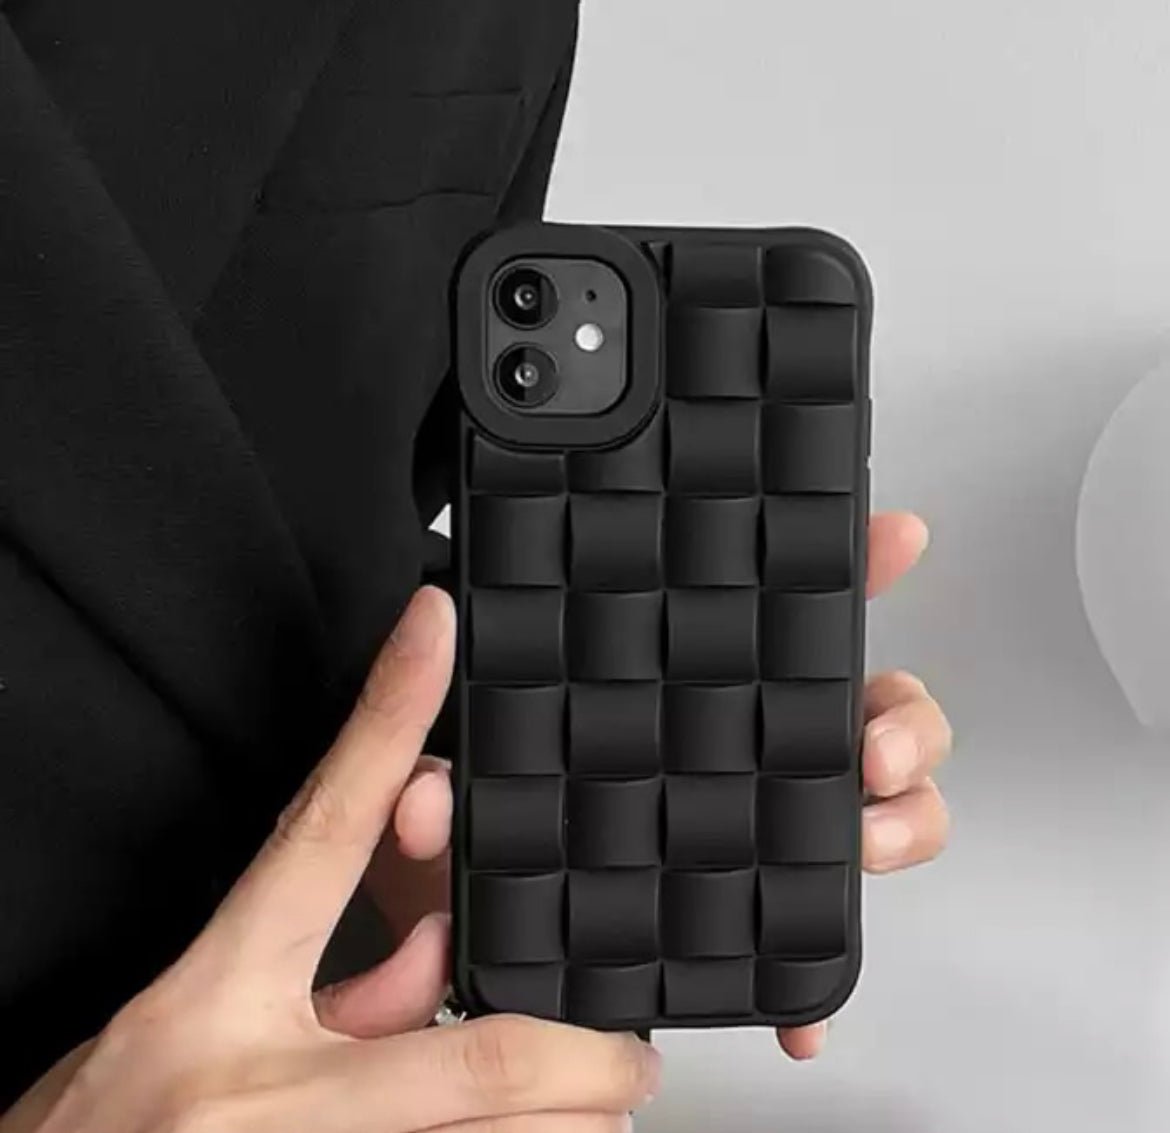 3D cube iPhone case- Special Order 2 - 3 Week Delivery - Oliver Barret